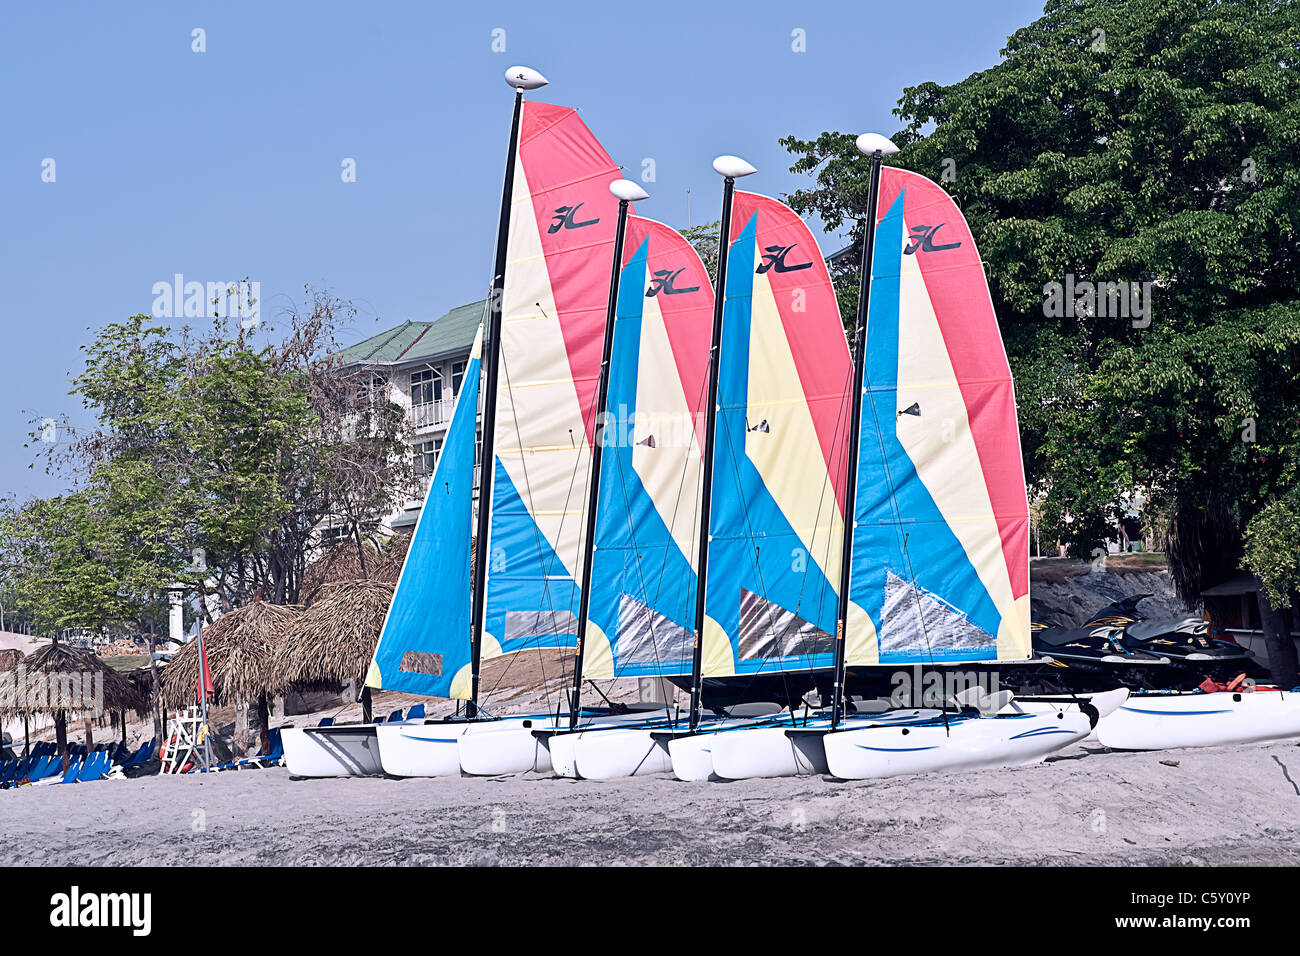 Ready to sail catamarans on the beach at Pacific ocean Stock Photo